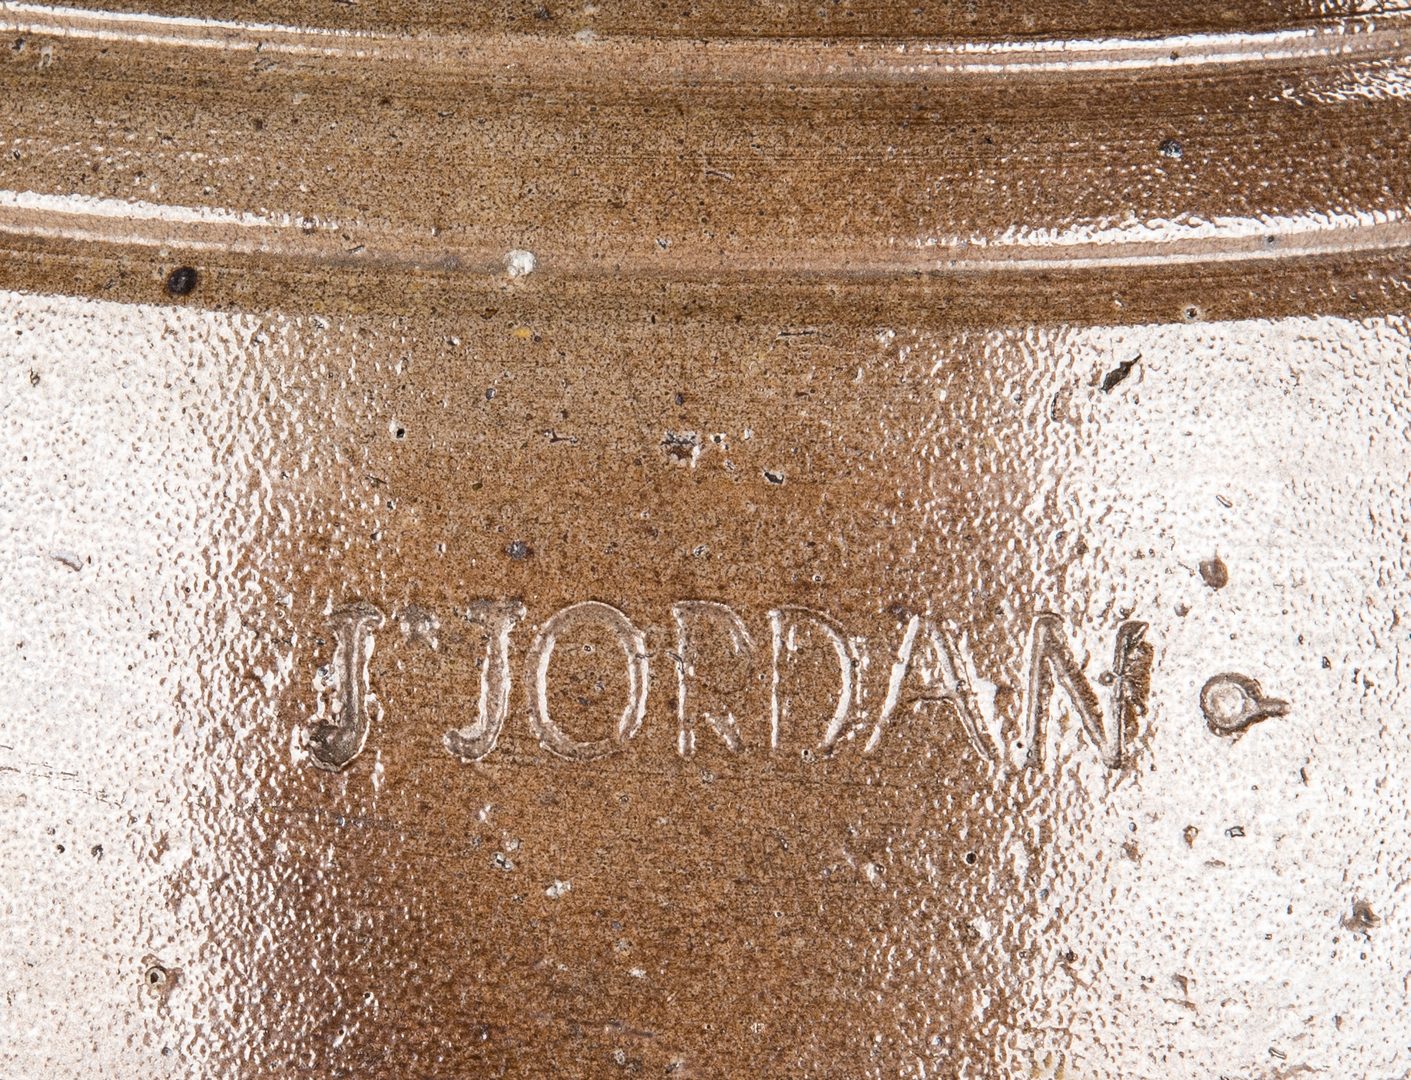 Lot 165: NC Stoneware Pottery Jar, Jesse Jordan